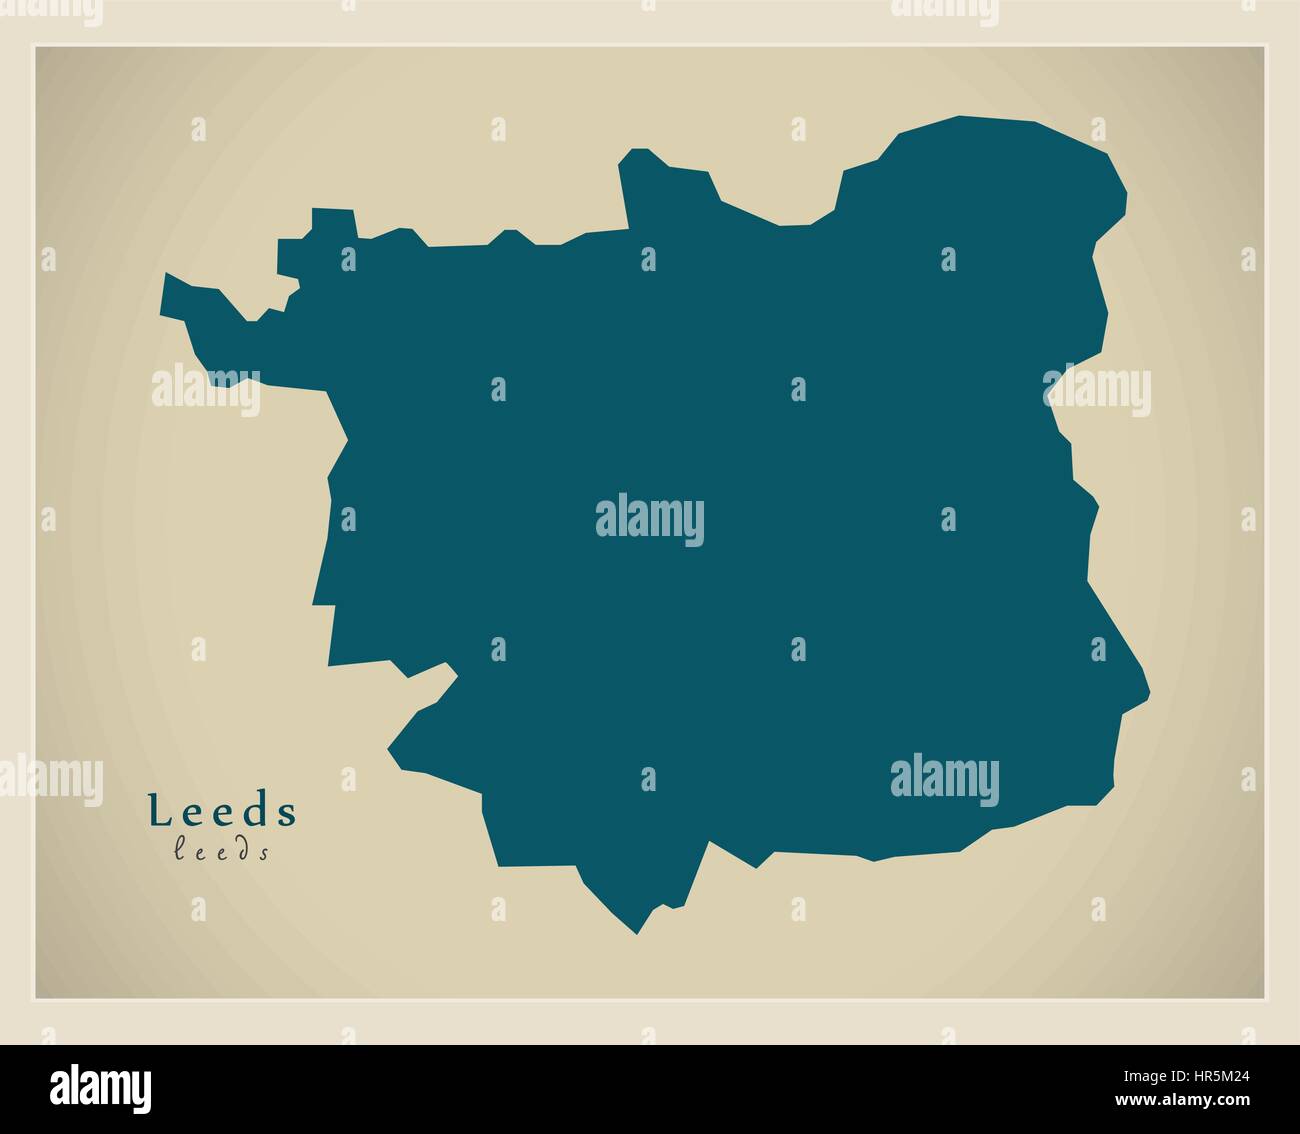 Modern City Maps - Leeds England illustration Stock Vector